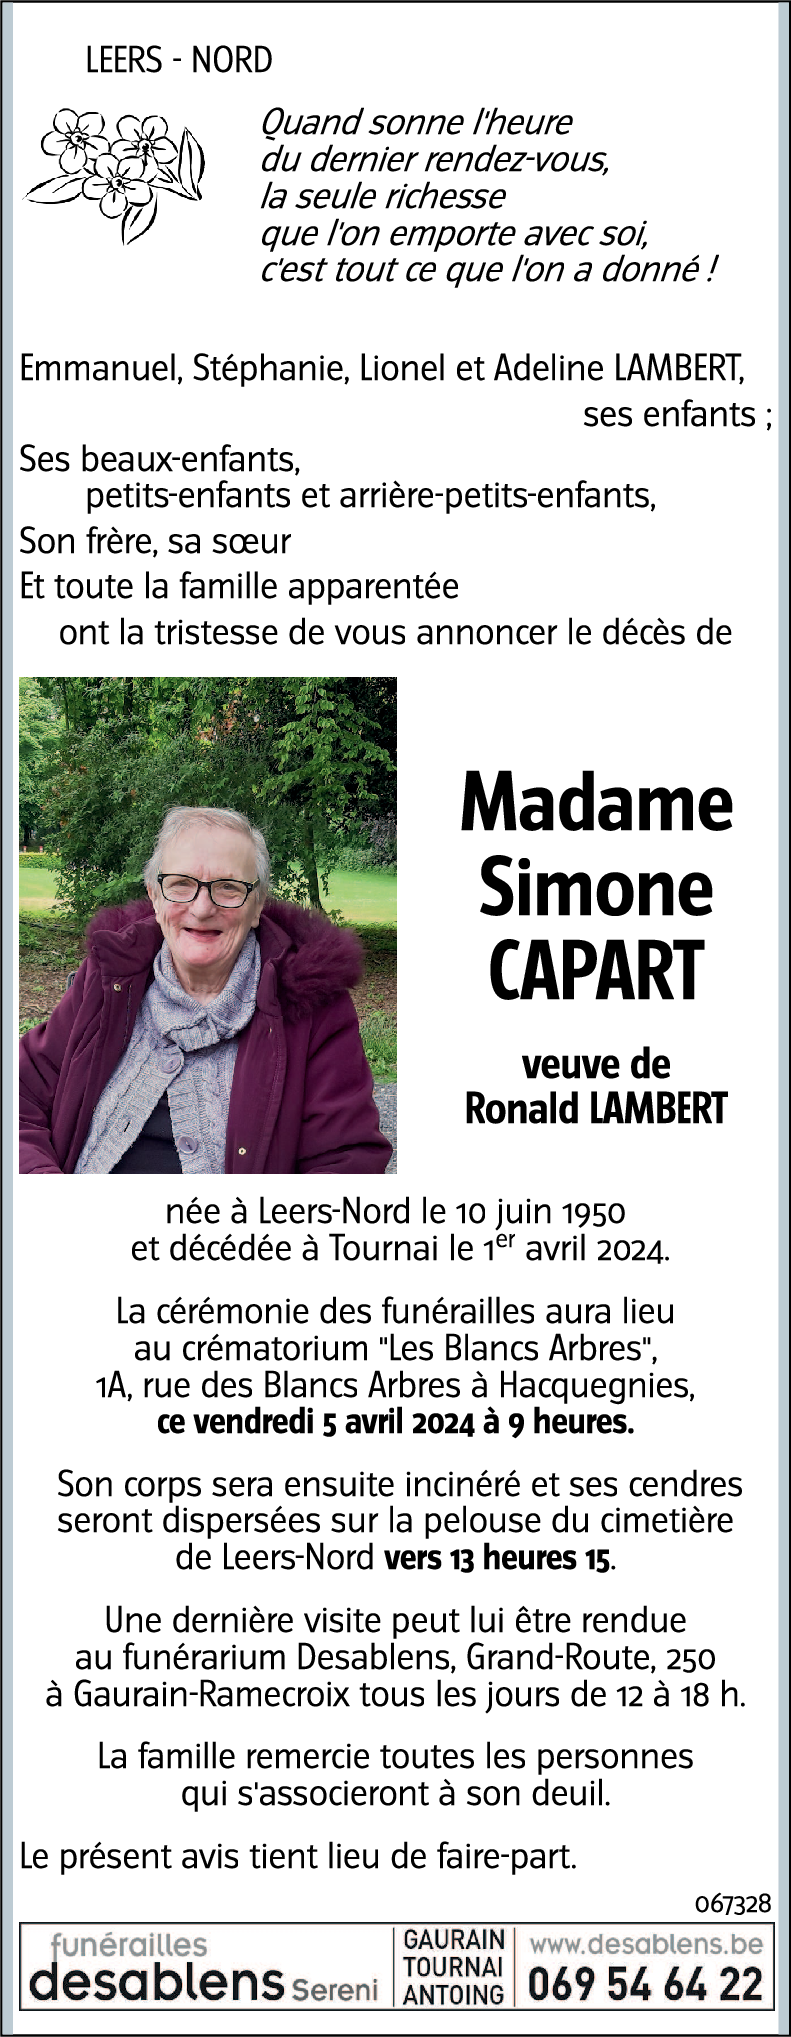 Simone CAPART